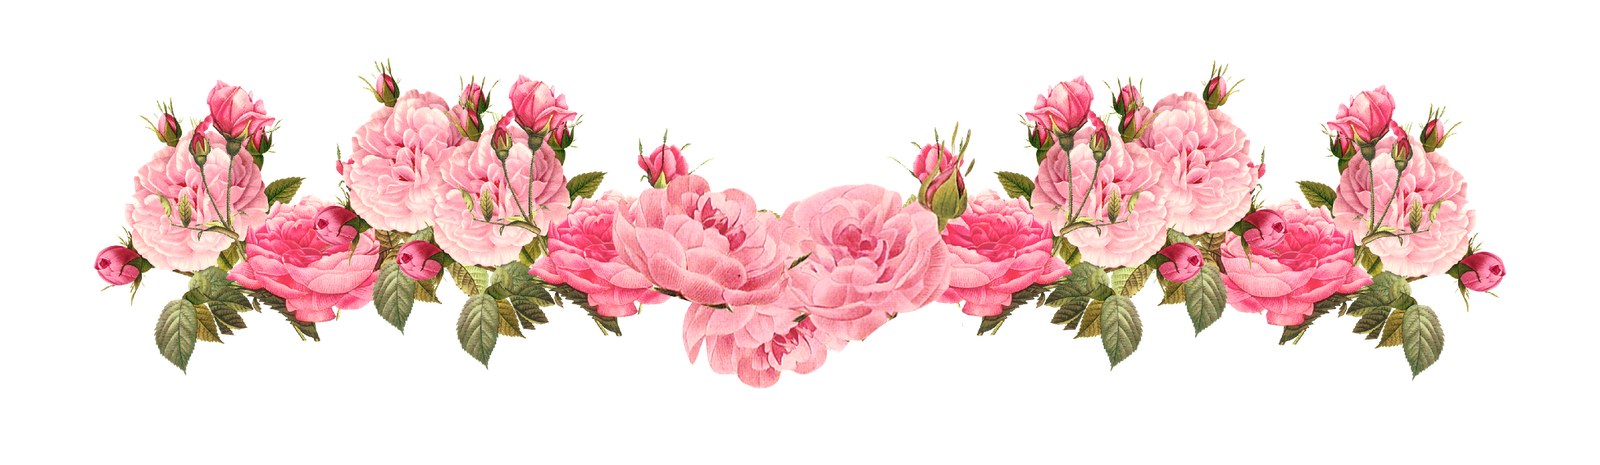 rose wallpaper border,flower,pink,plant,petal,flowering plant